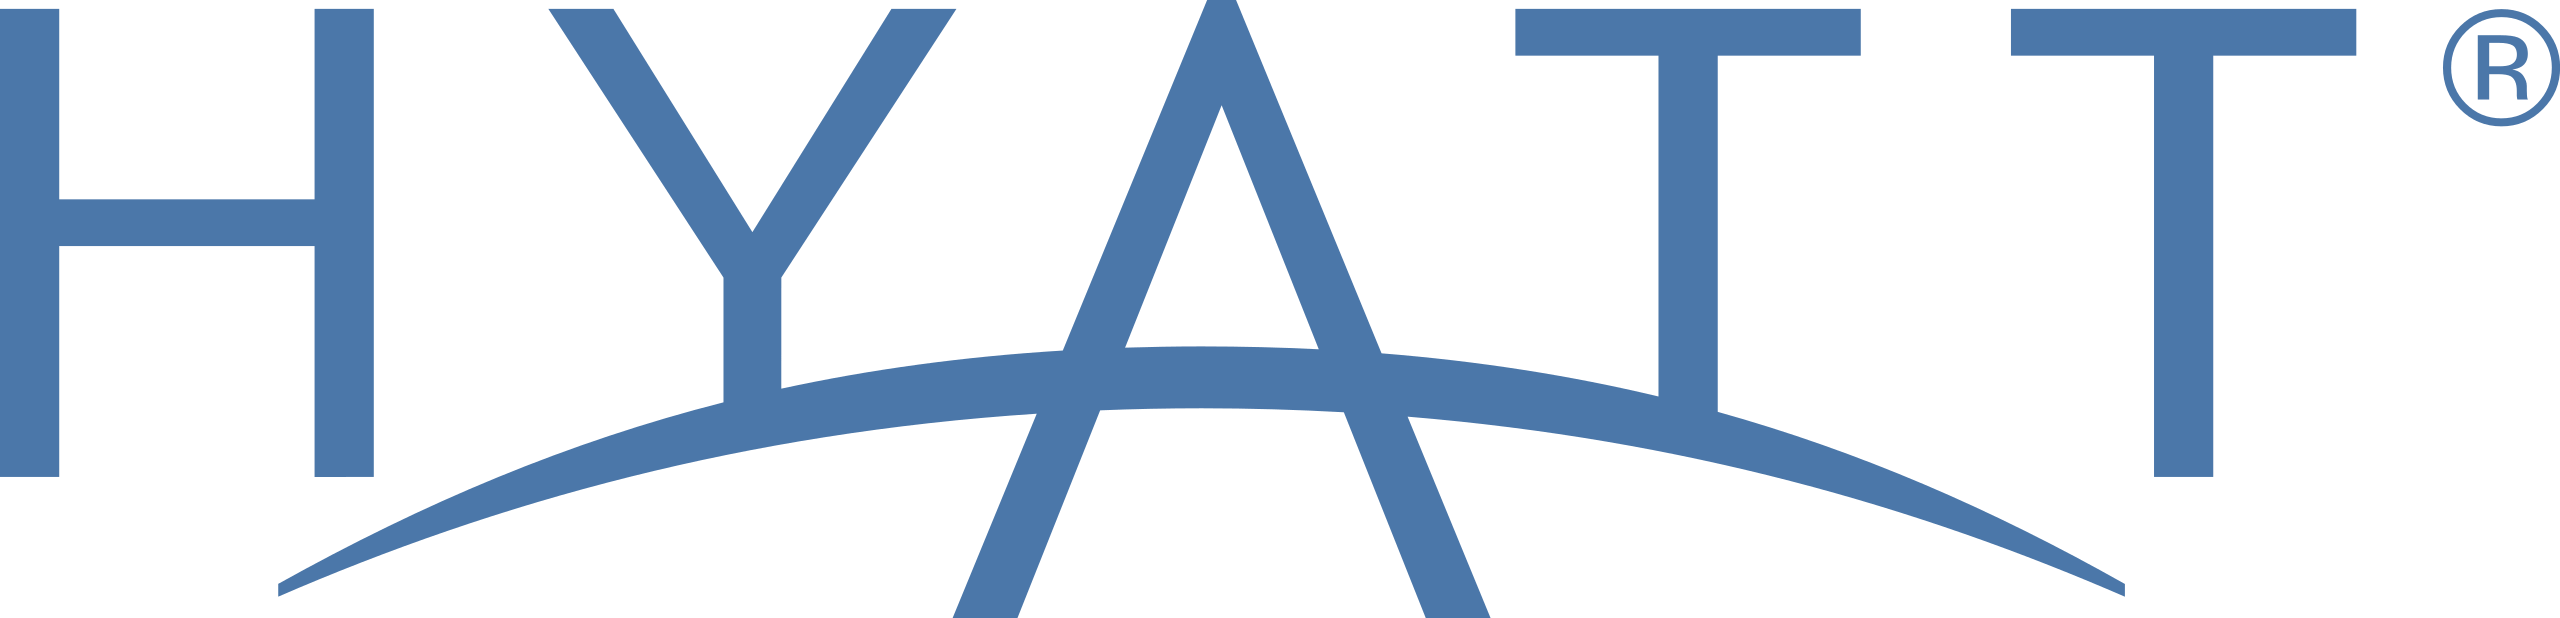 Hyatt Logo svg